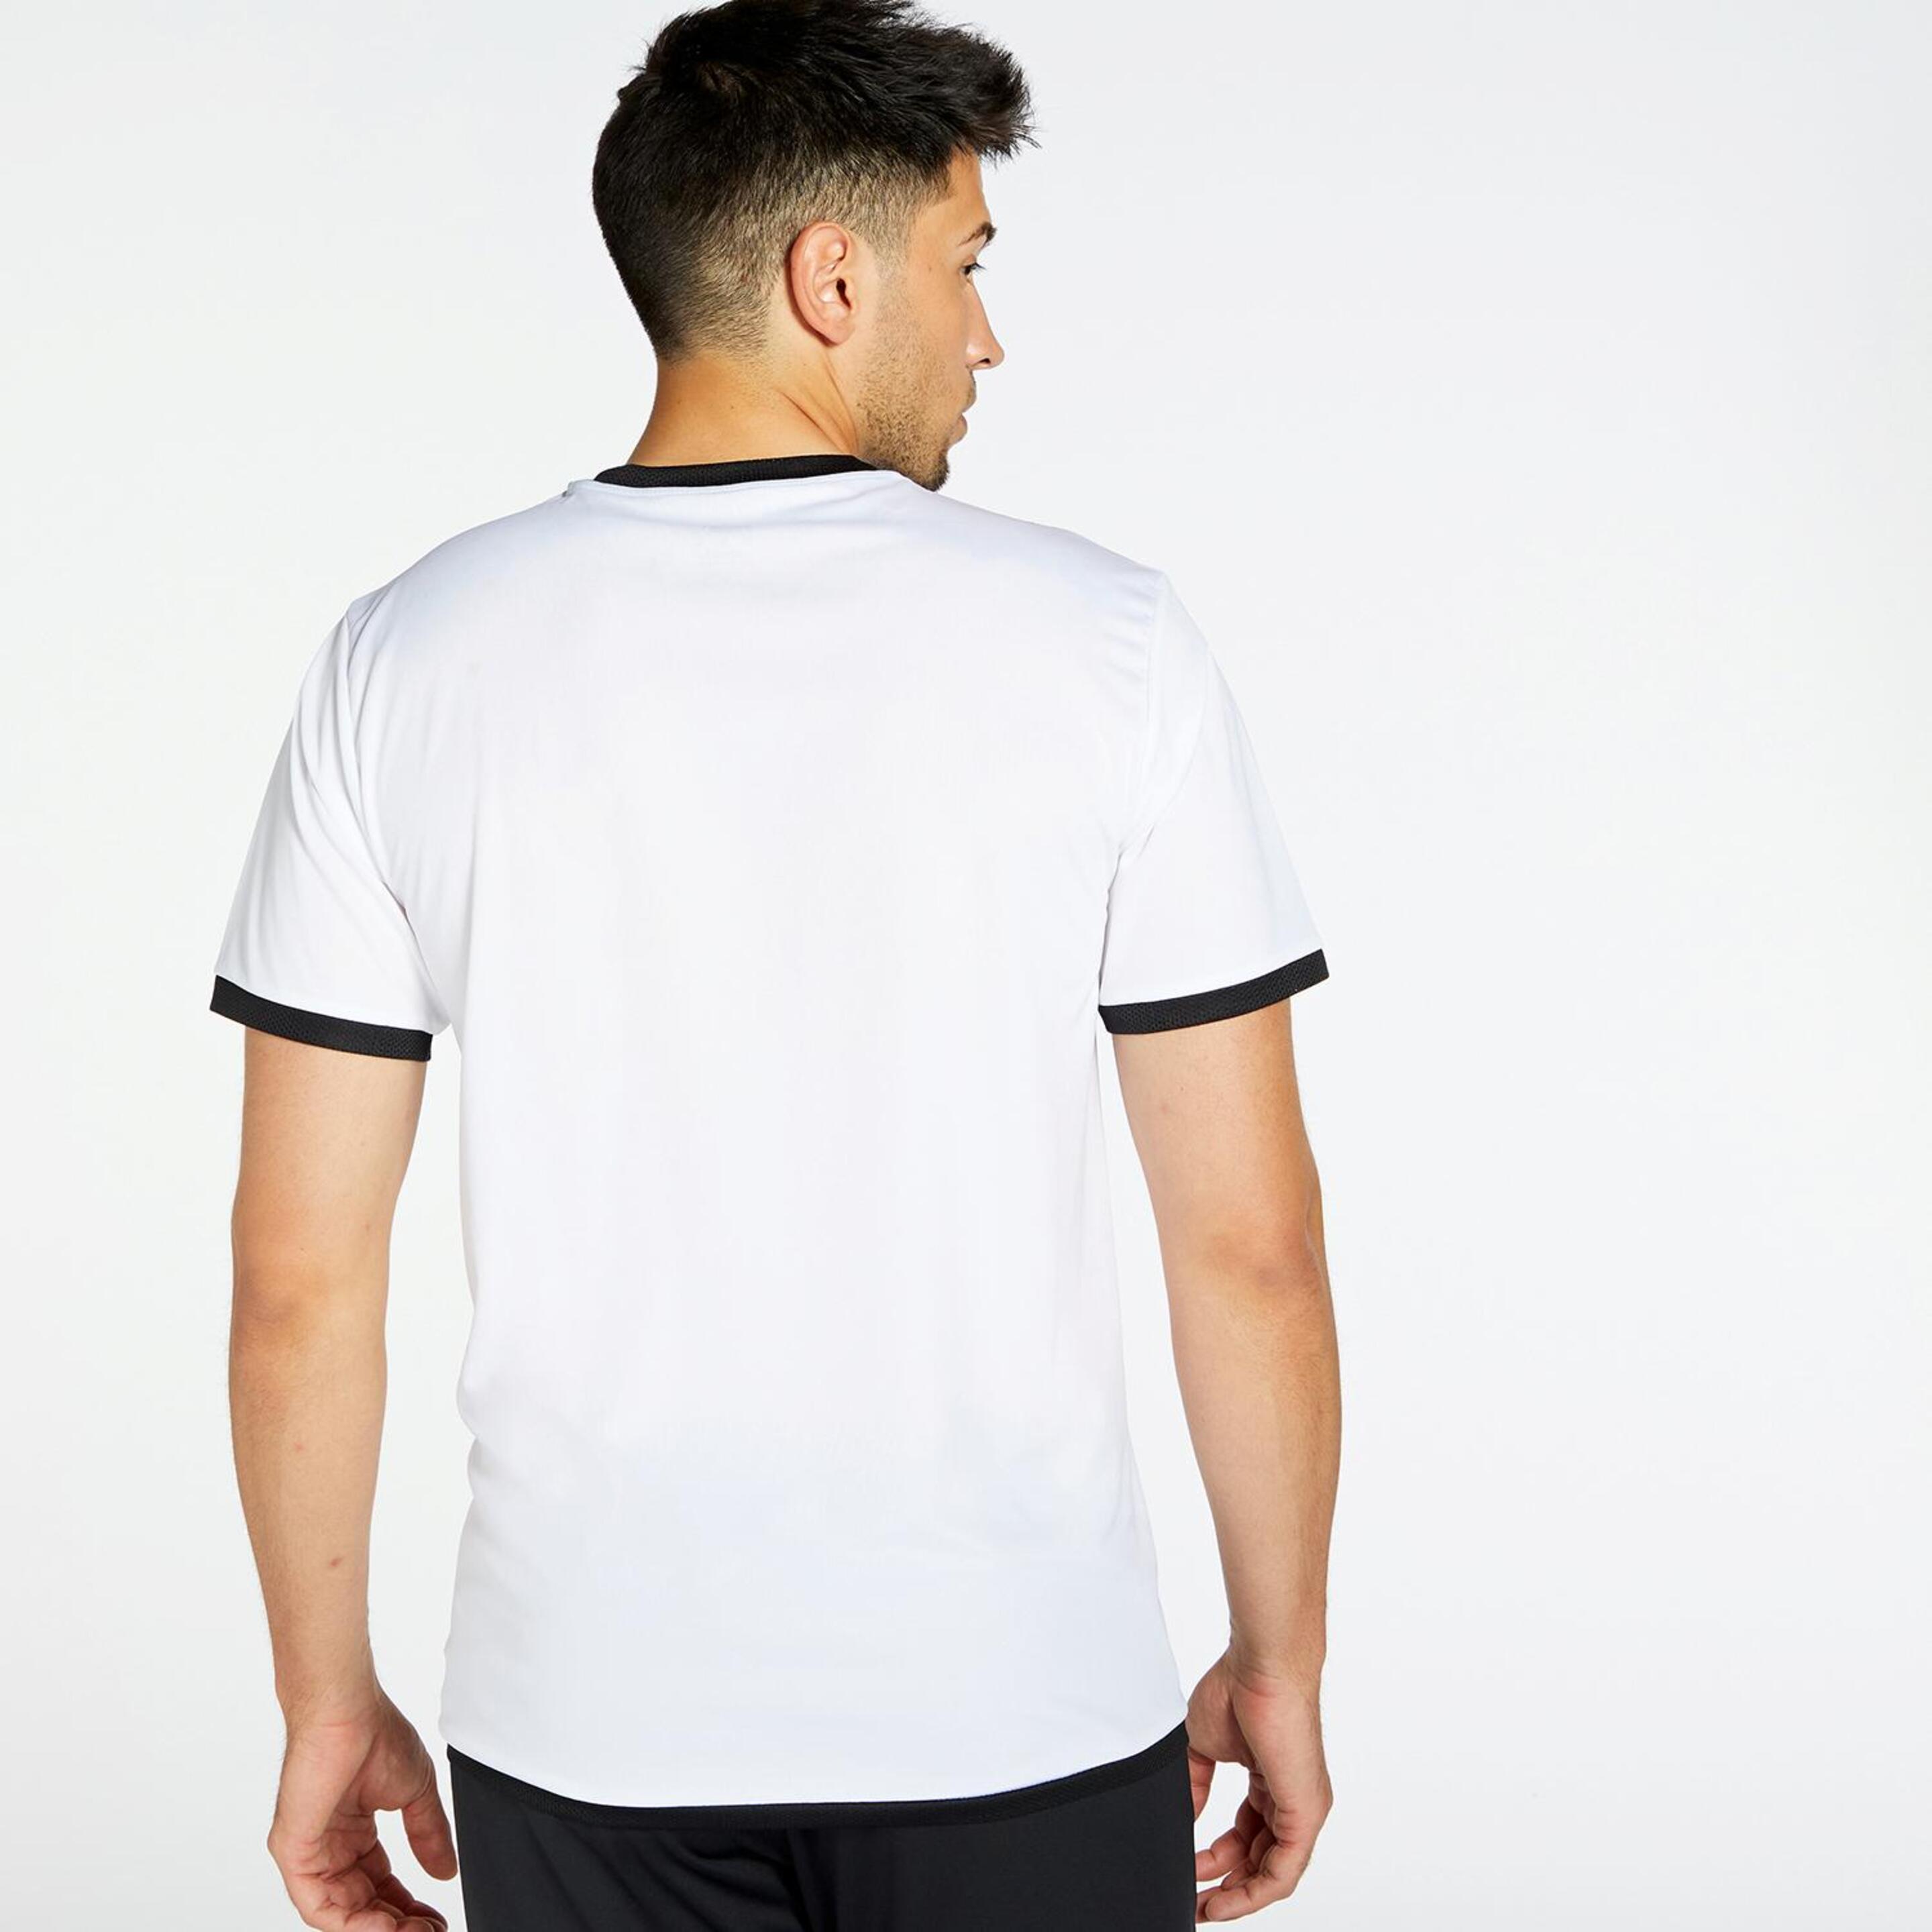 Puma Teamliga - Blanco - Camiseta Hombre